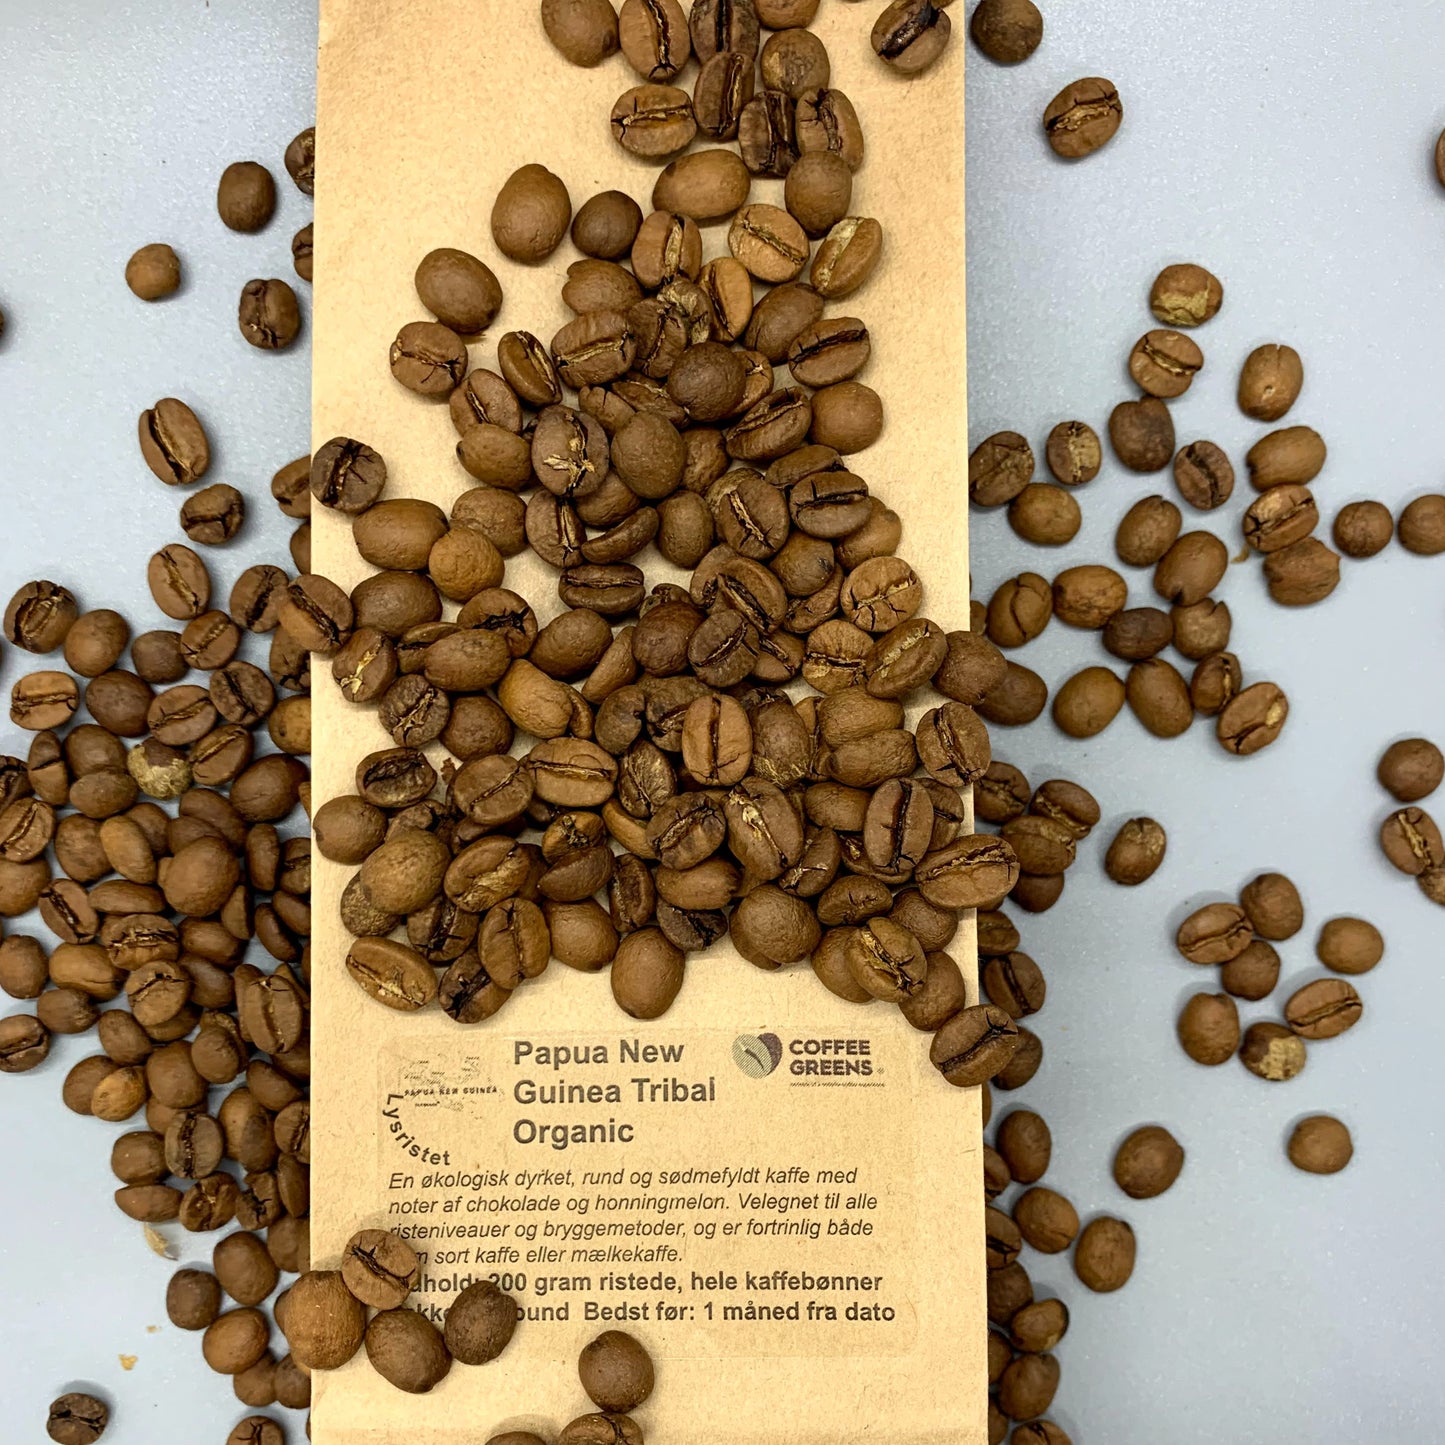 Papua New Guinea Tribal Organic - Ristede kaffebønner.